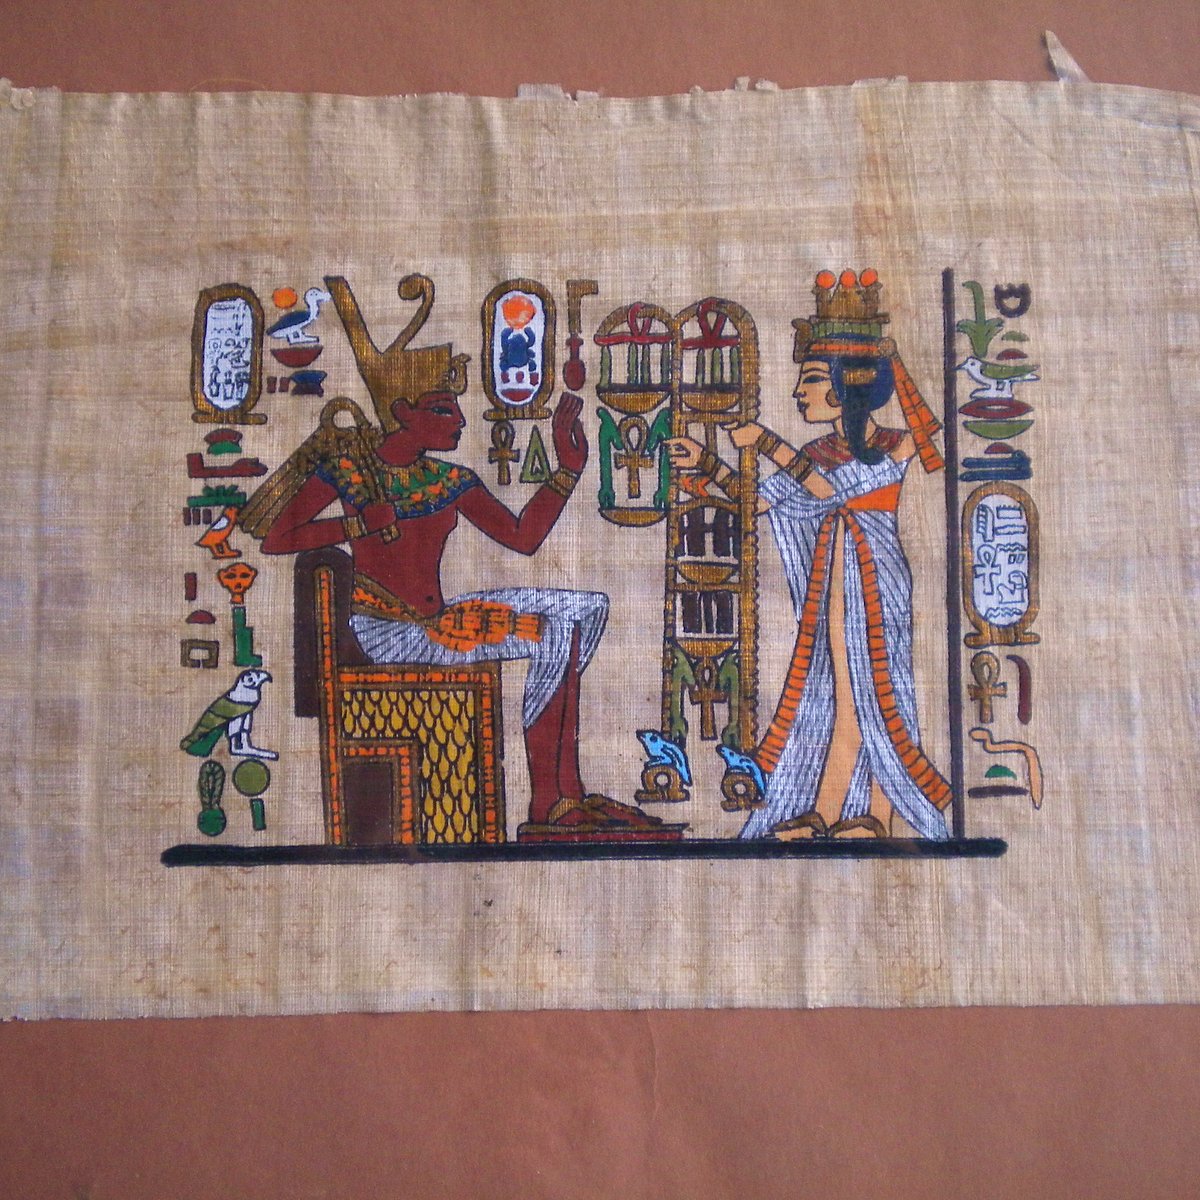 Papyrus Institute, Каир: лучшие советы перед посещением - Tripadvisor